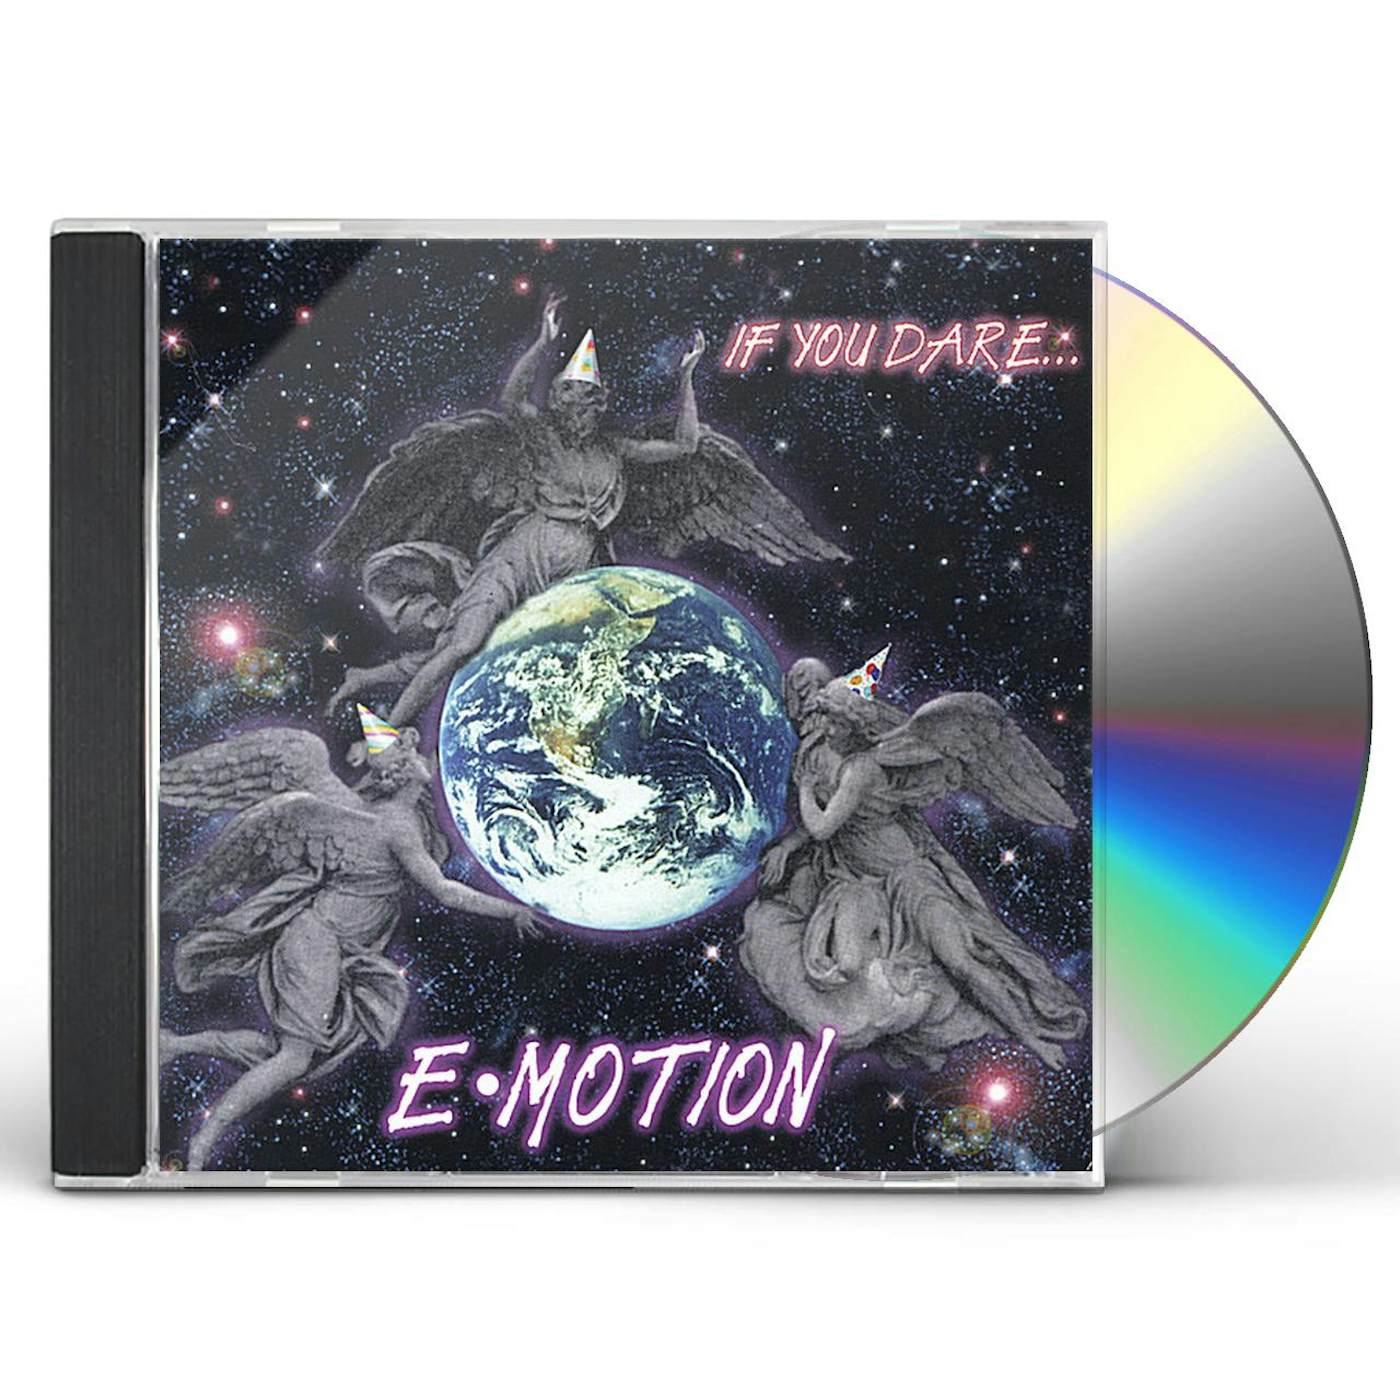 E-Motion IF YOU DARE CD